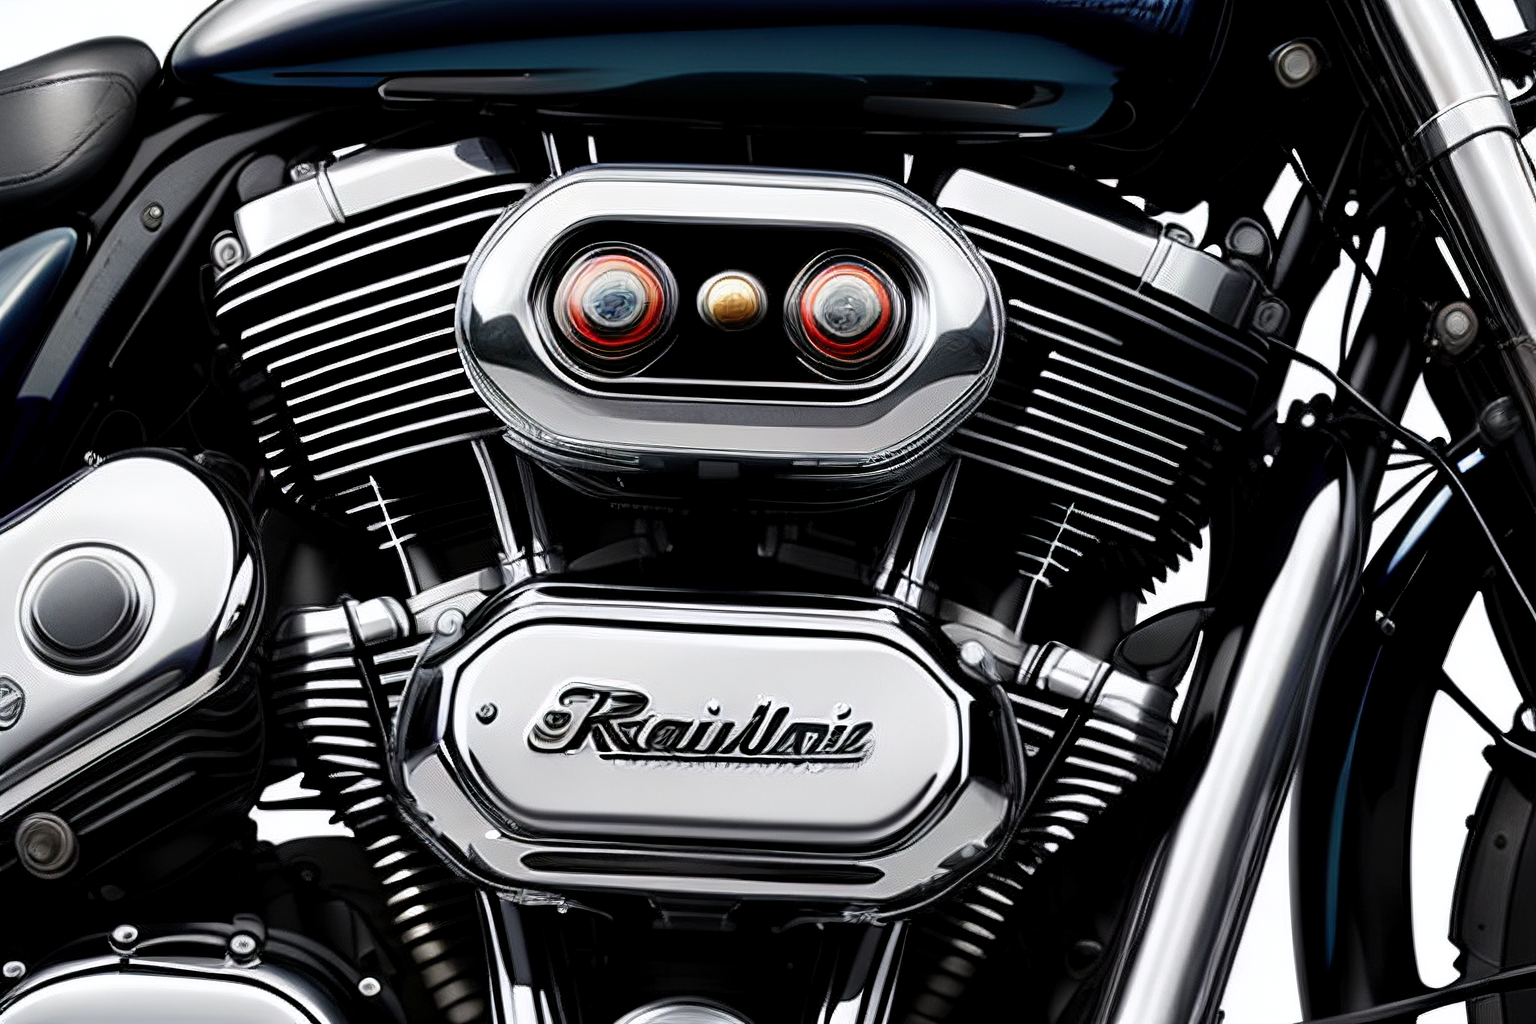 Harley Davidson Turn Signal Problems: Fixes